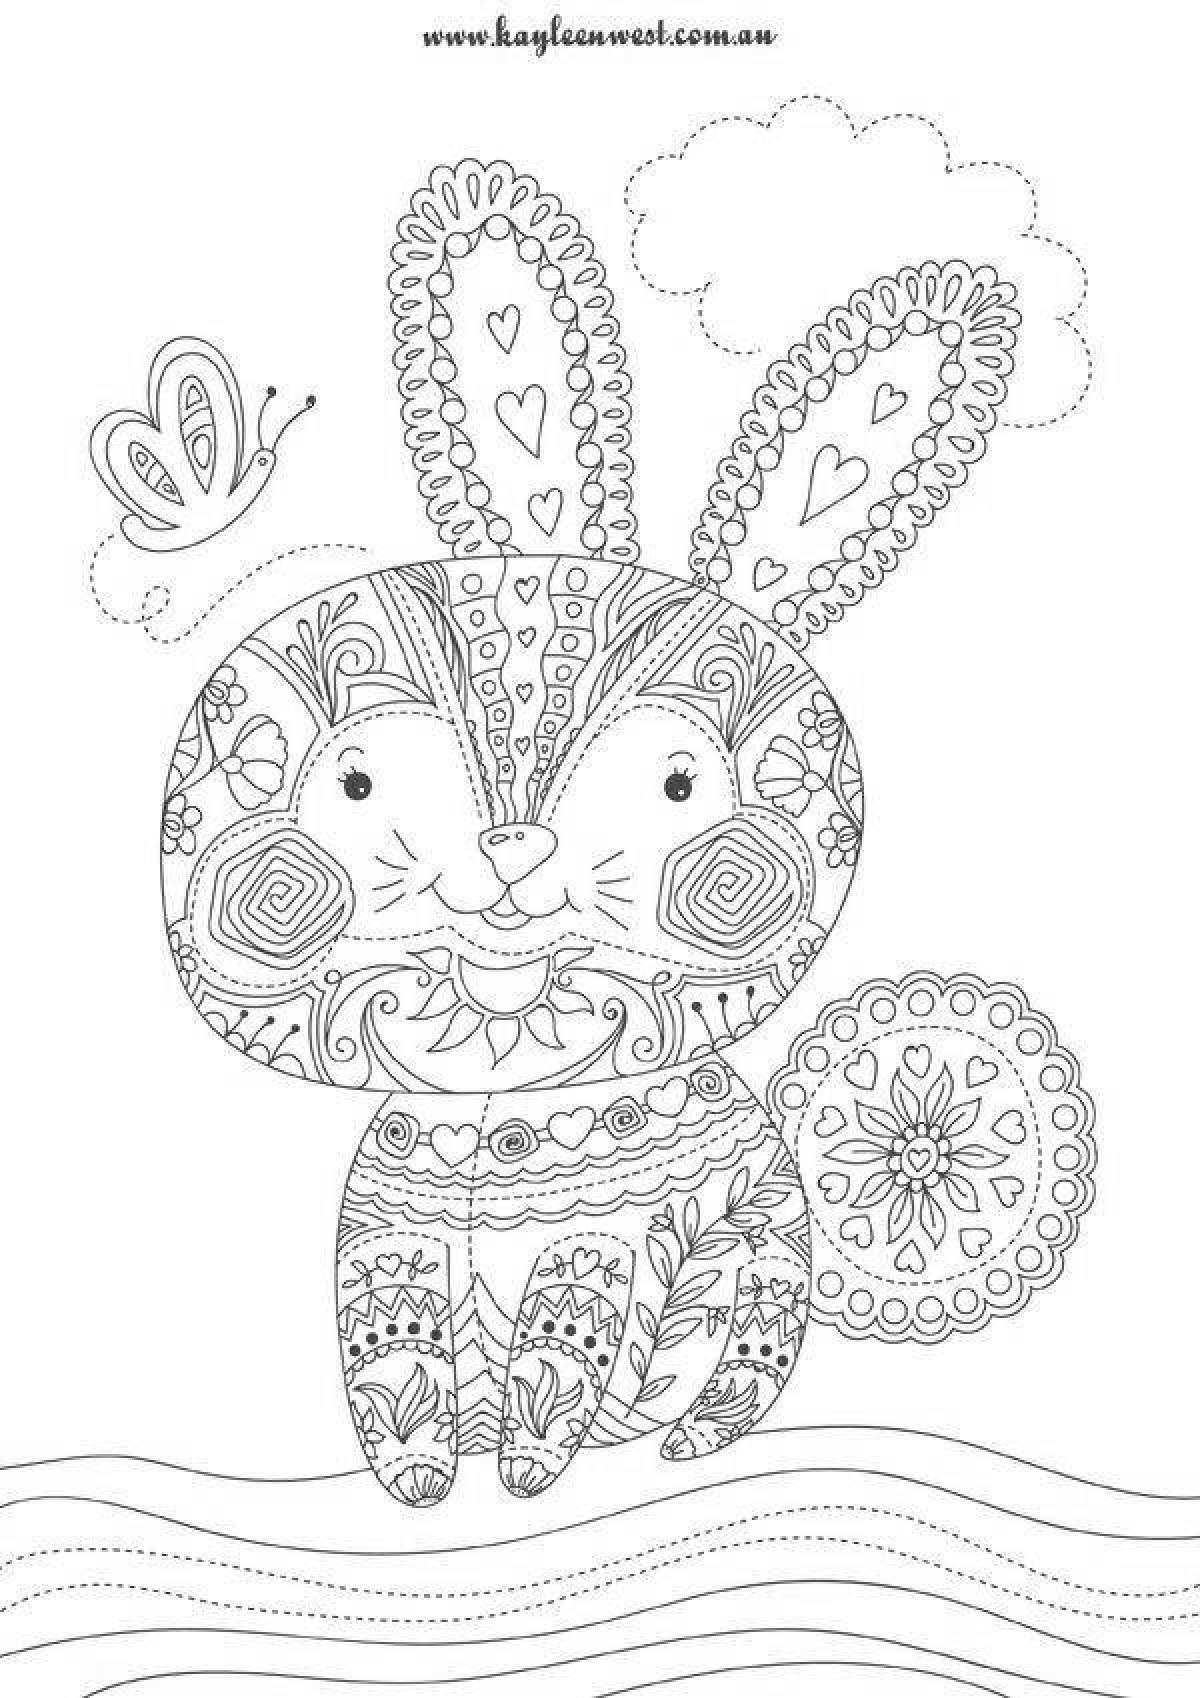 Relaxing anti-stress rabbit coloring book